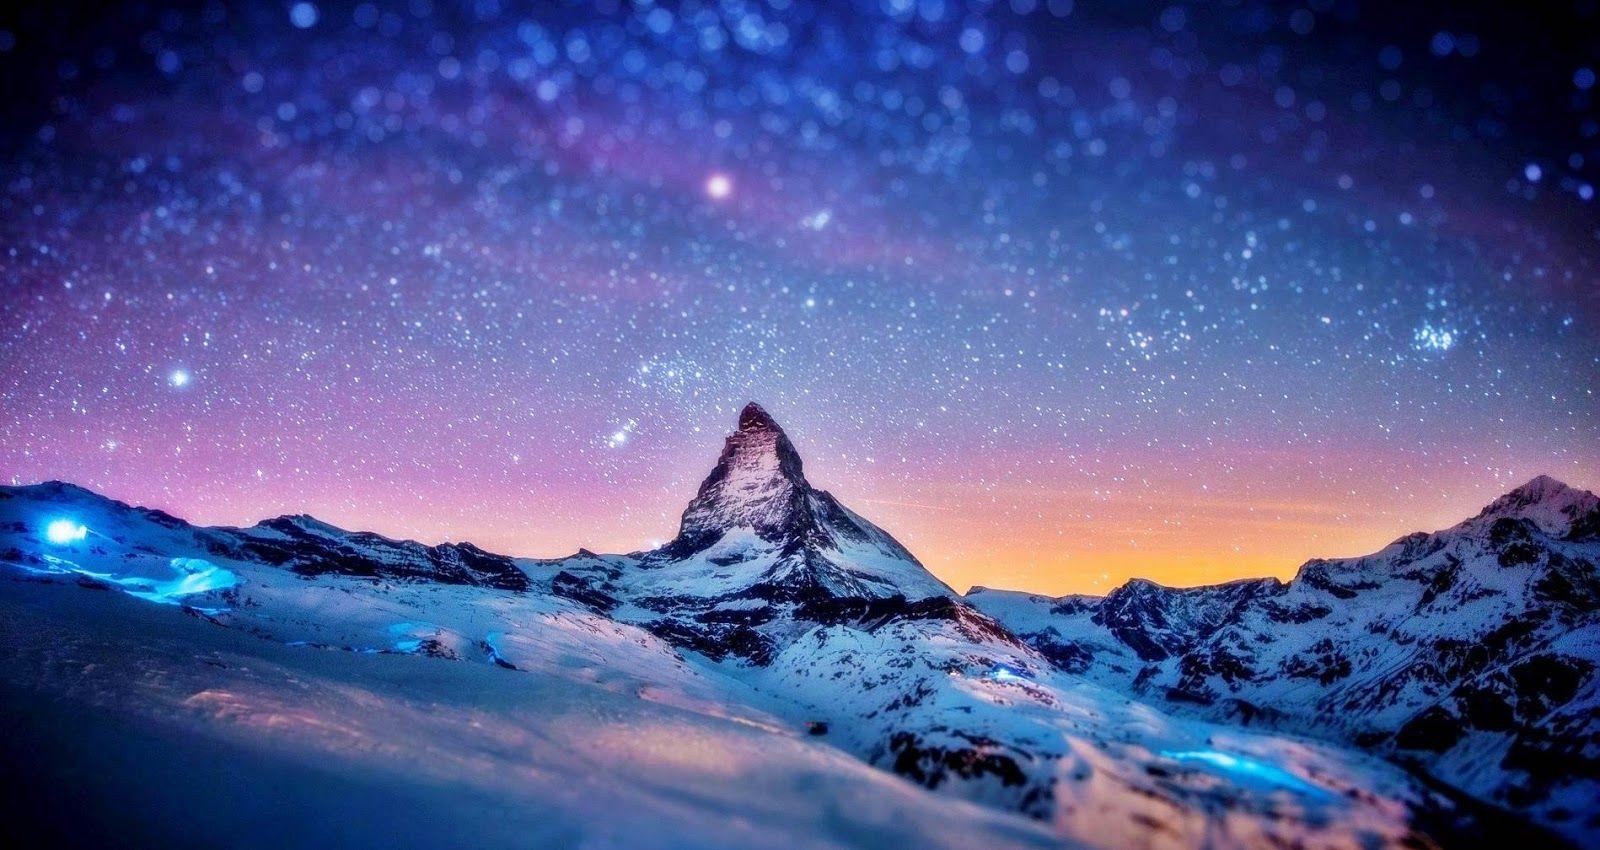 Snow Mountain Wallpaper HD. Snow Mountain in night. Mountain